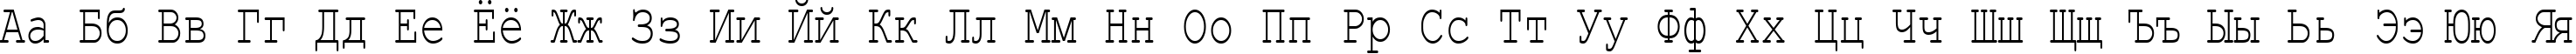 Пример написания русского алфавита шрифтом Courier New Cyr_75n